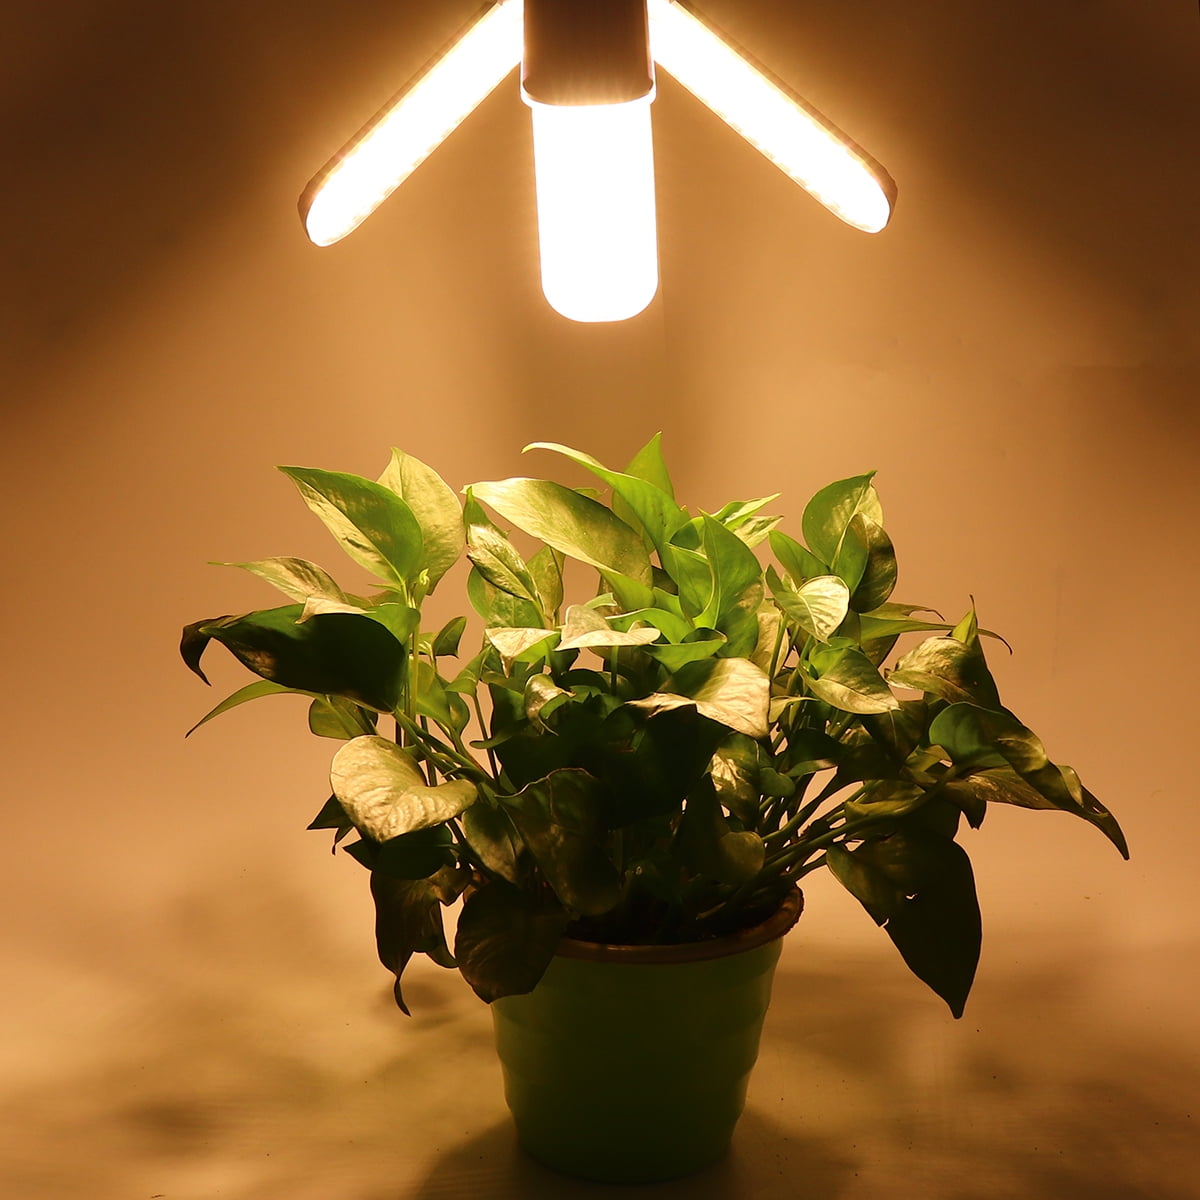 Hydroponic Indoor Plants LED Grow Lights 500W Full Spectrum Growing Lamp Light 